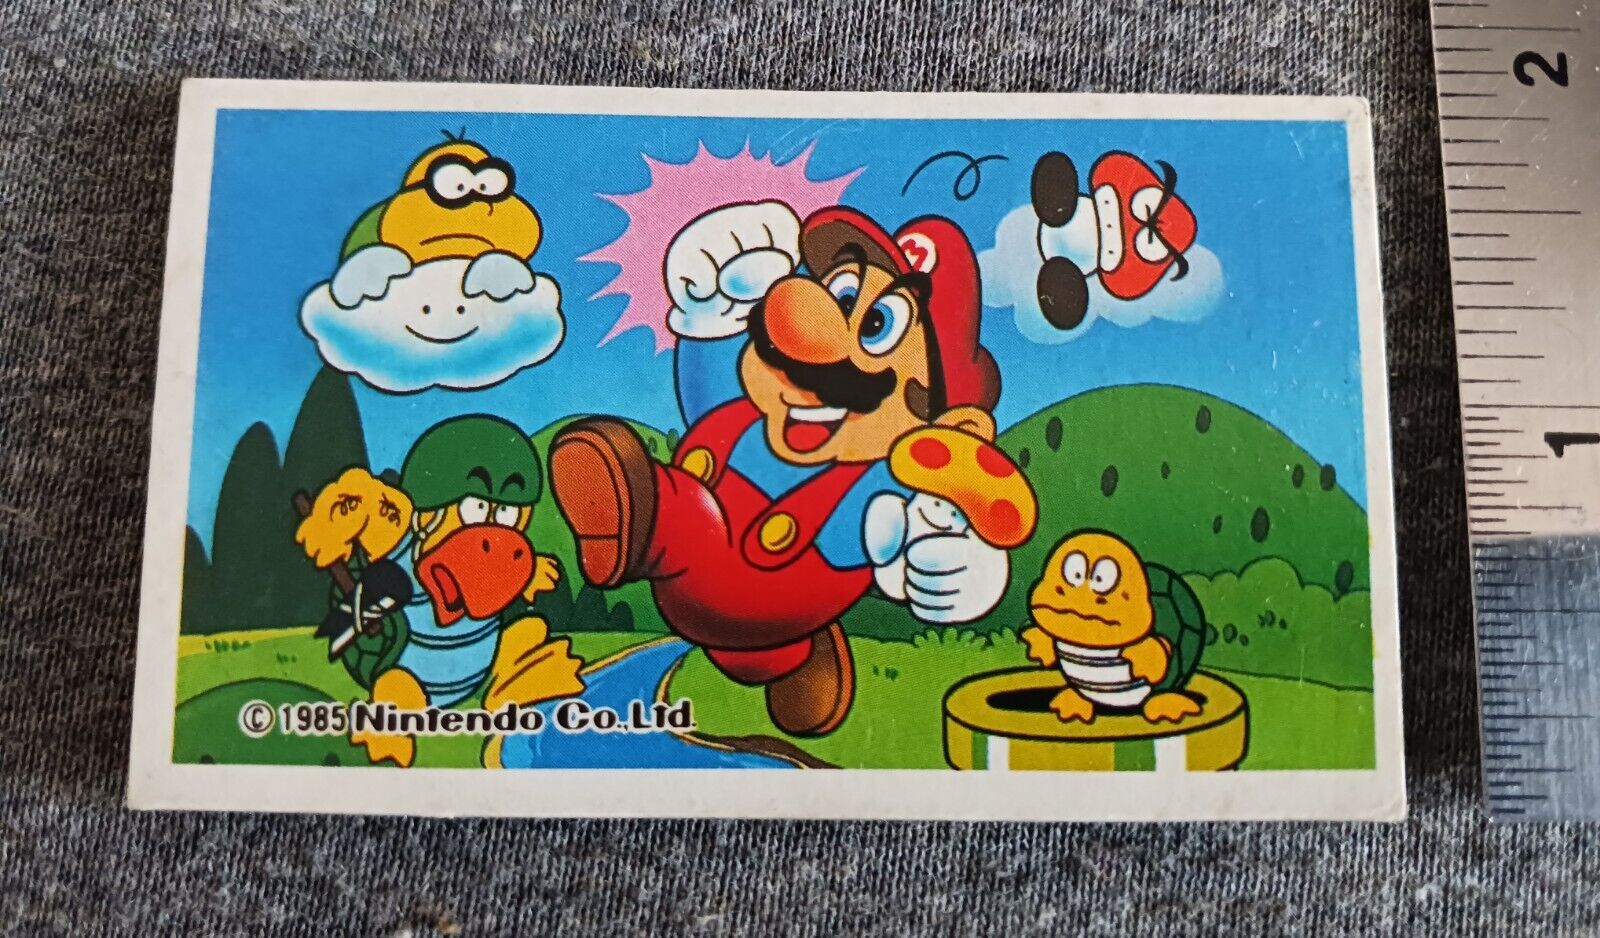 Menko Japan Trading Card Winner Card Super Mario Bros. Nintendo Famicom